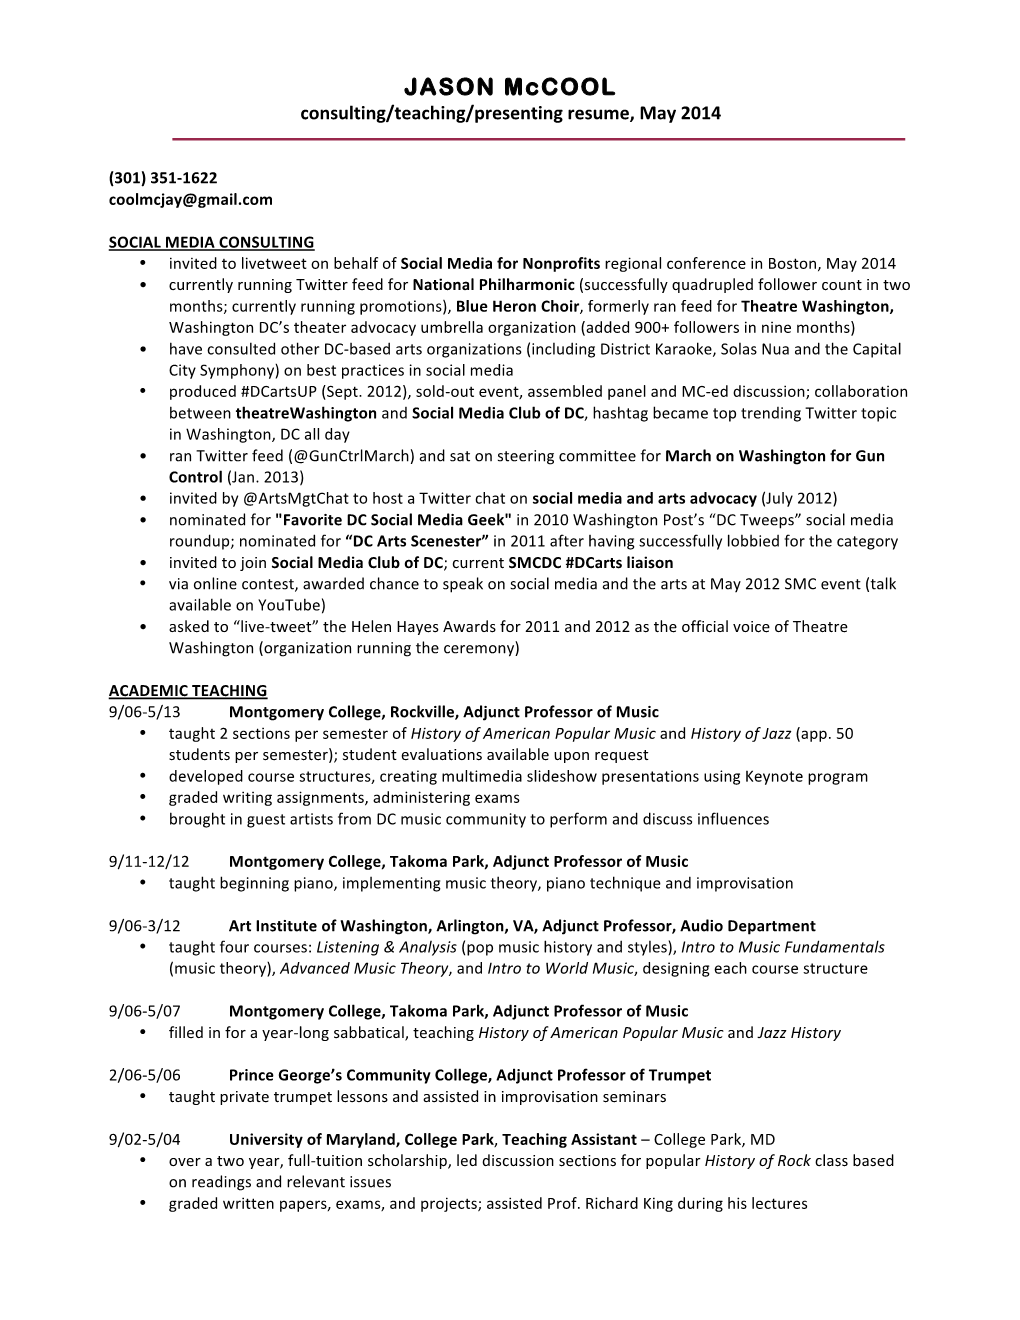 JASON Mccool Consulting/Teaching/Presenting Resume, May 2014